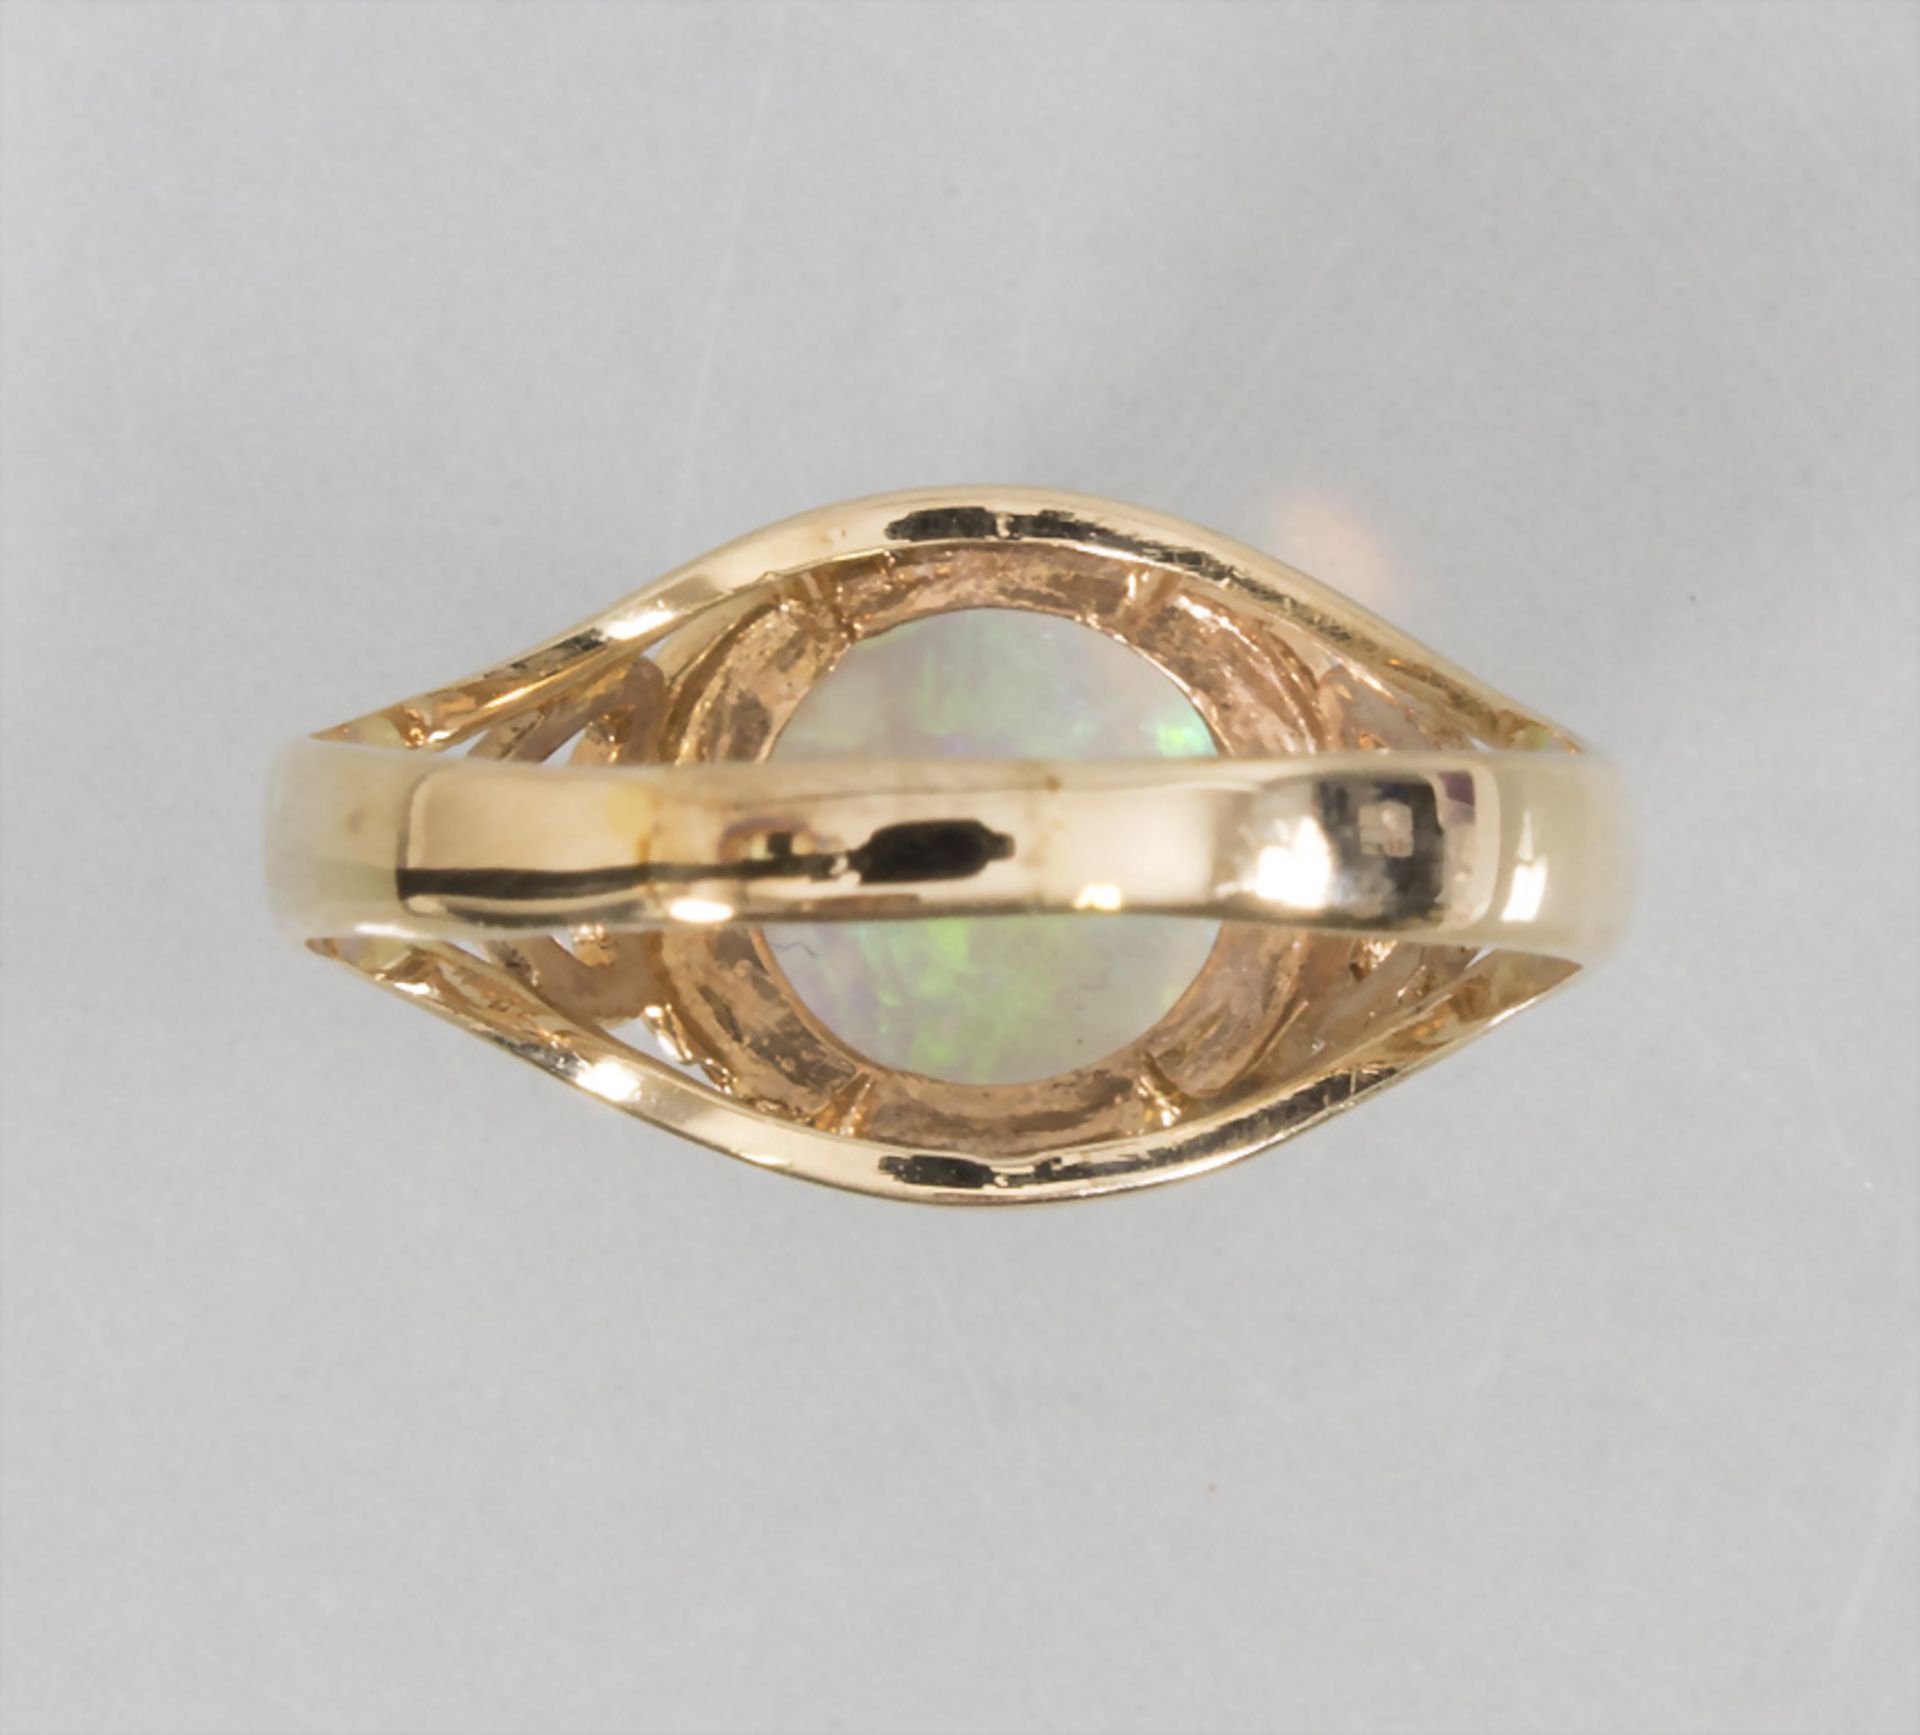 Damenring mit Opal / A ladies 14k gold ring with an opal - Bild 4 aus 4